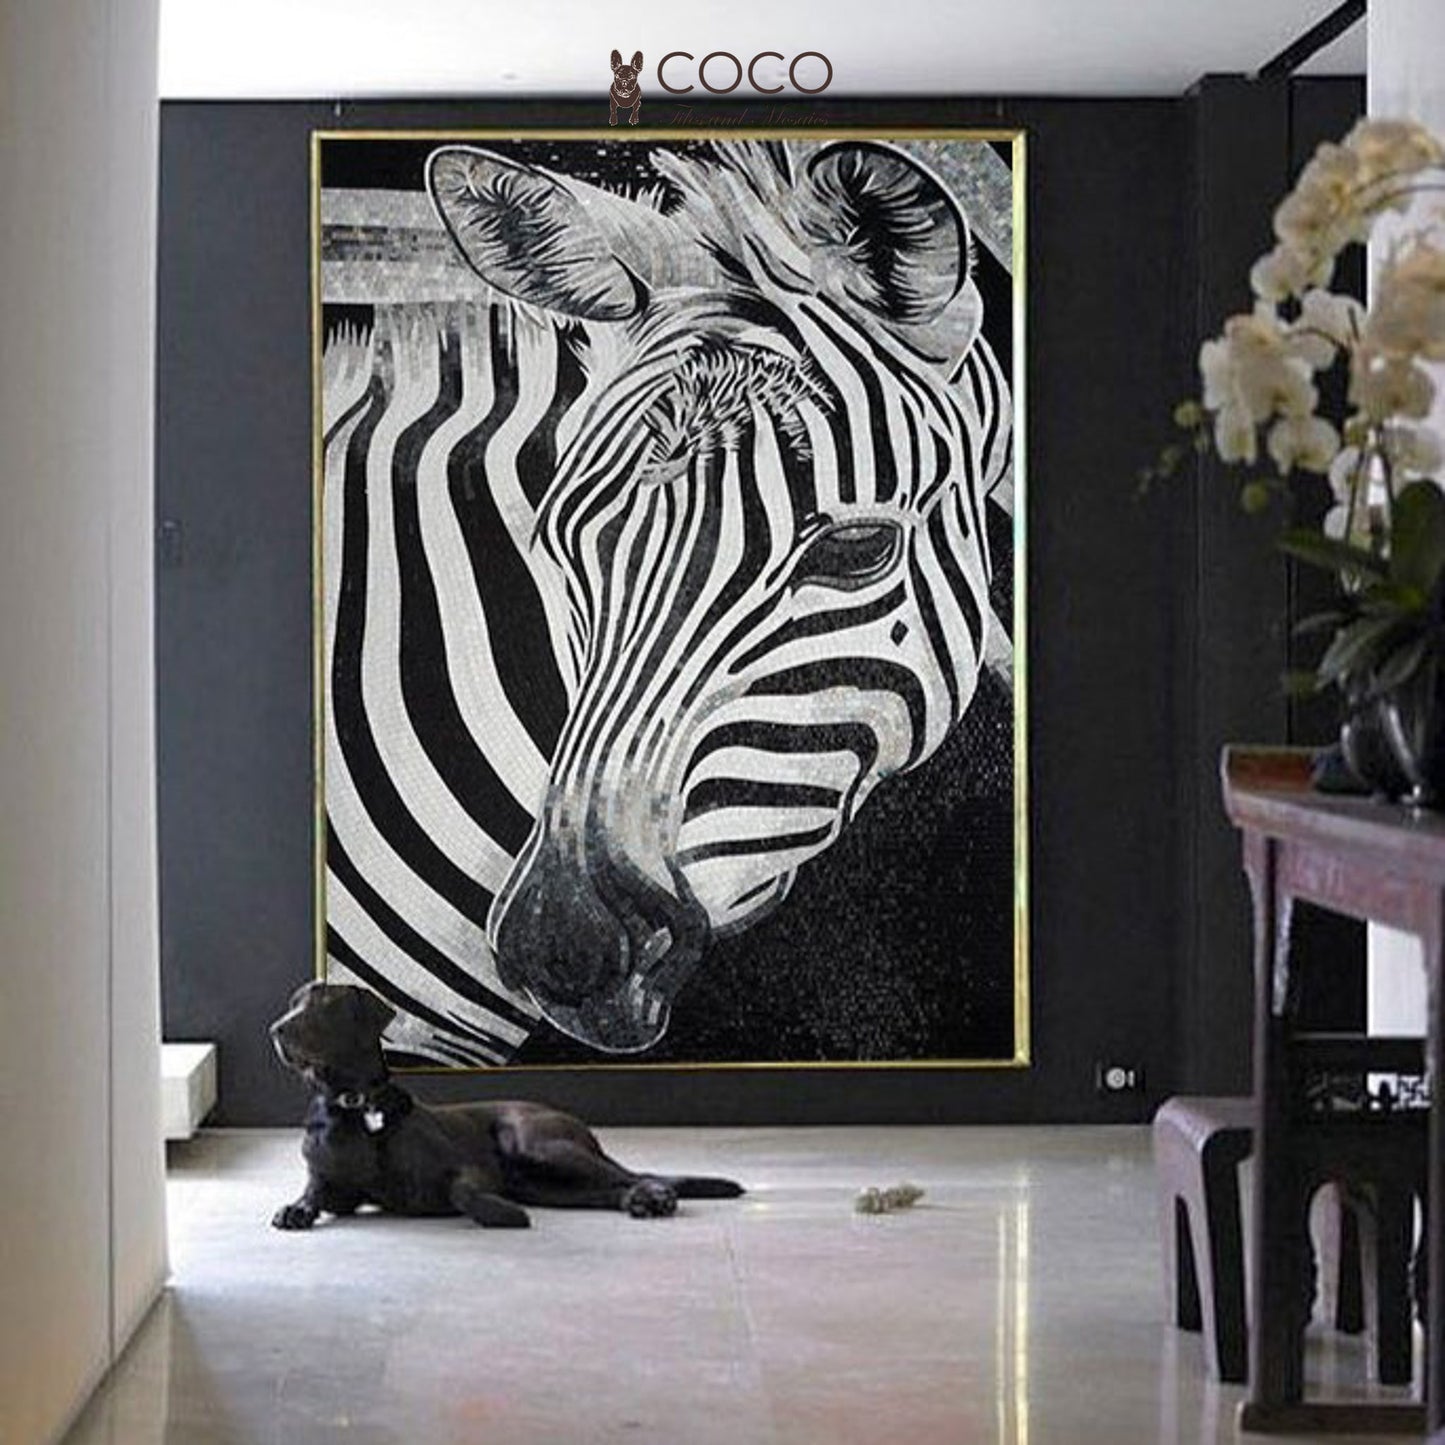 Artistic Mosaic - Striking Zebra